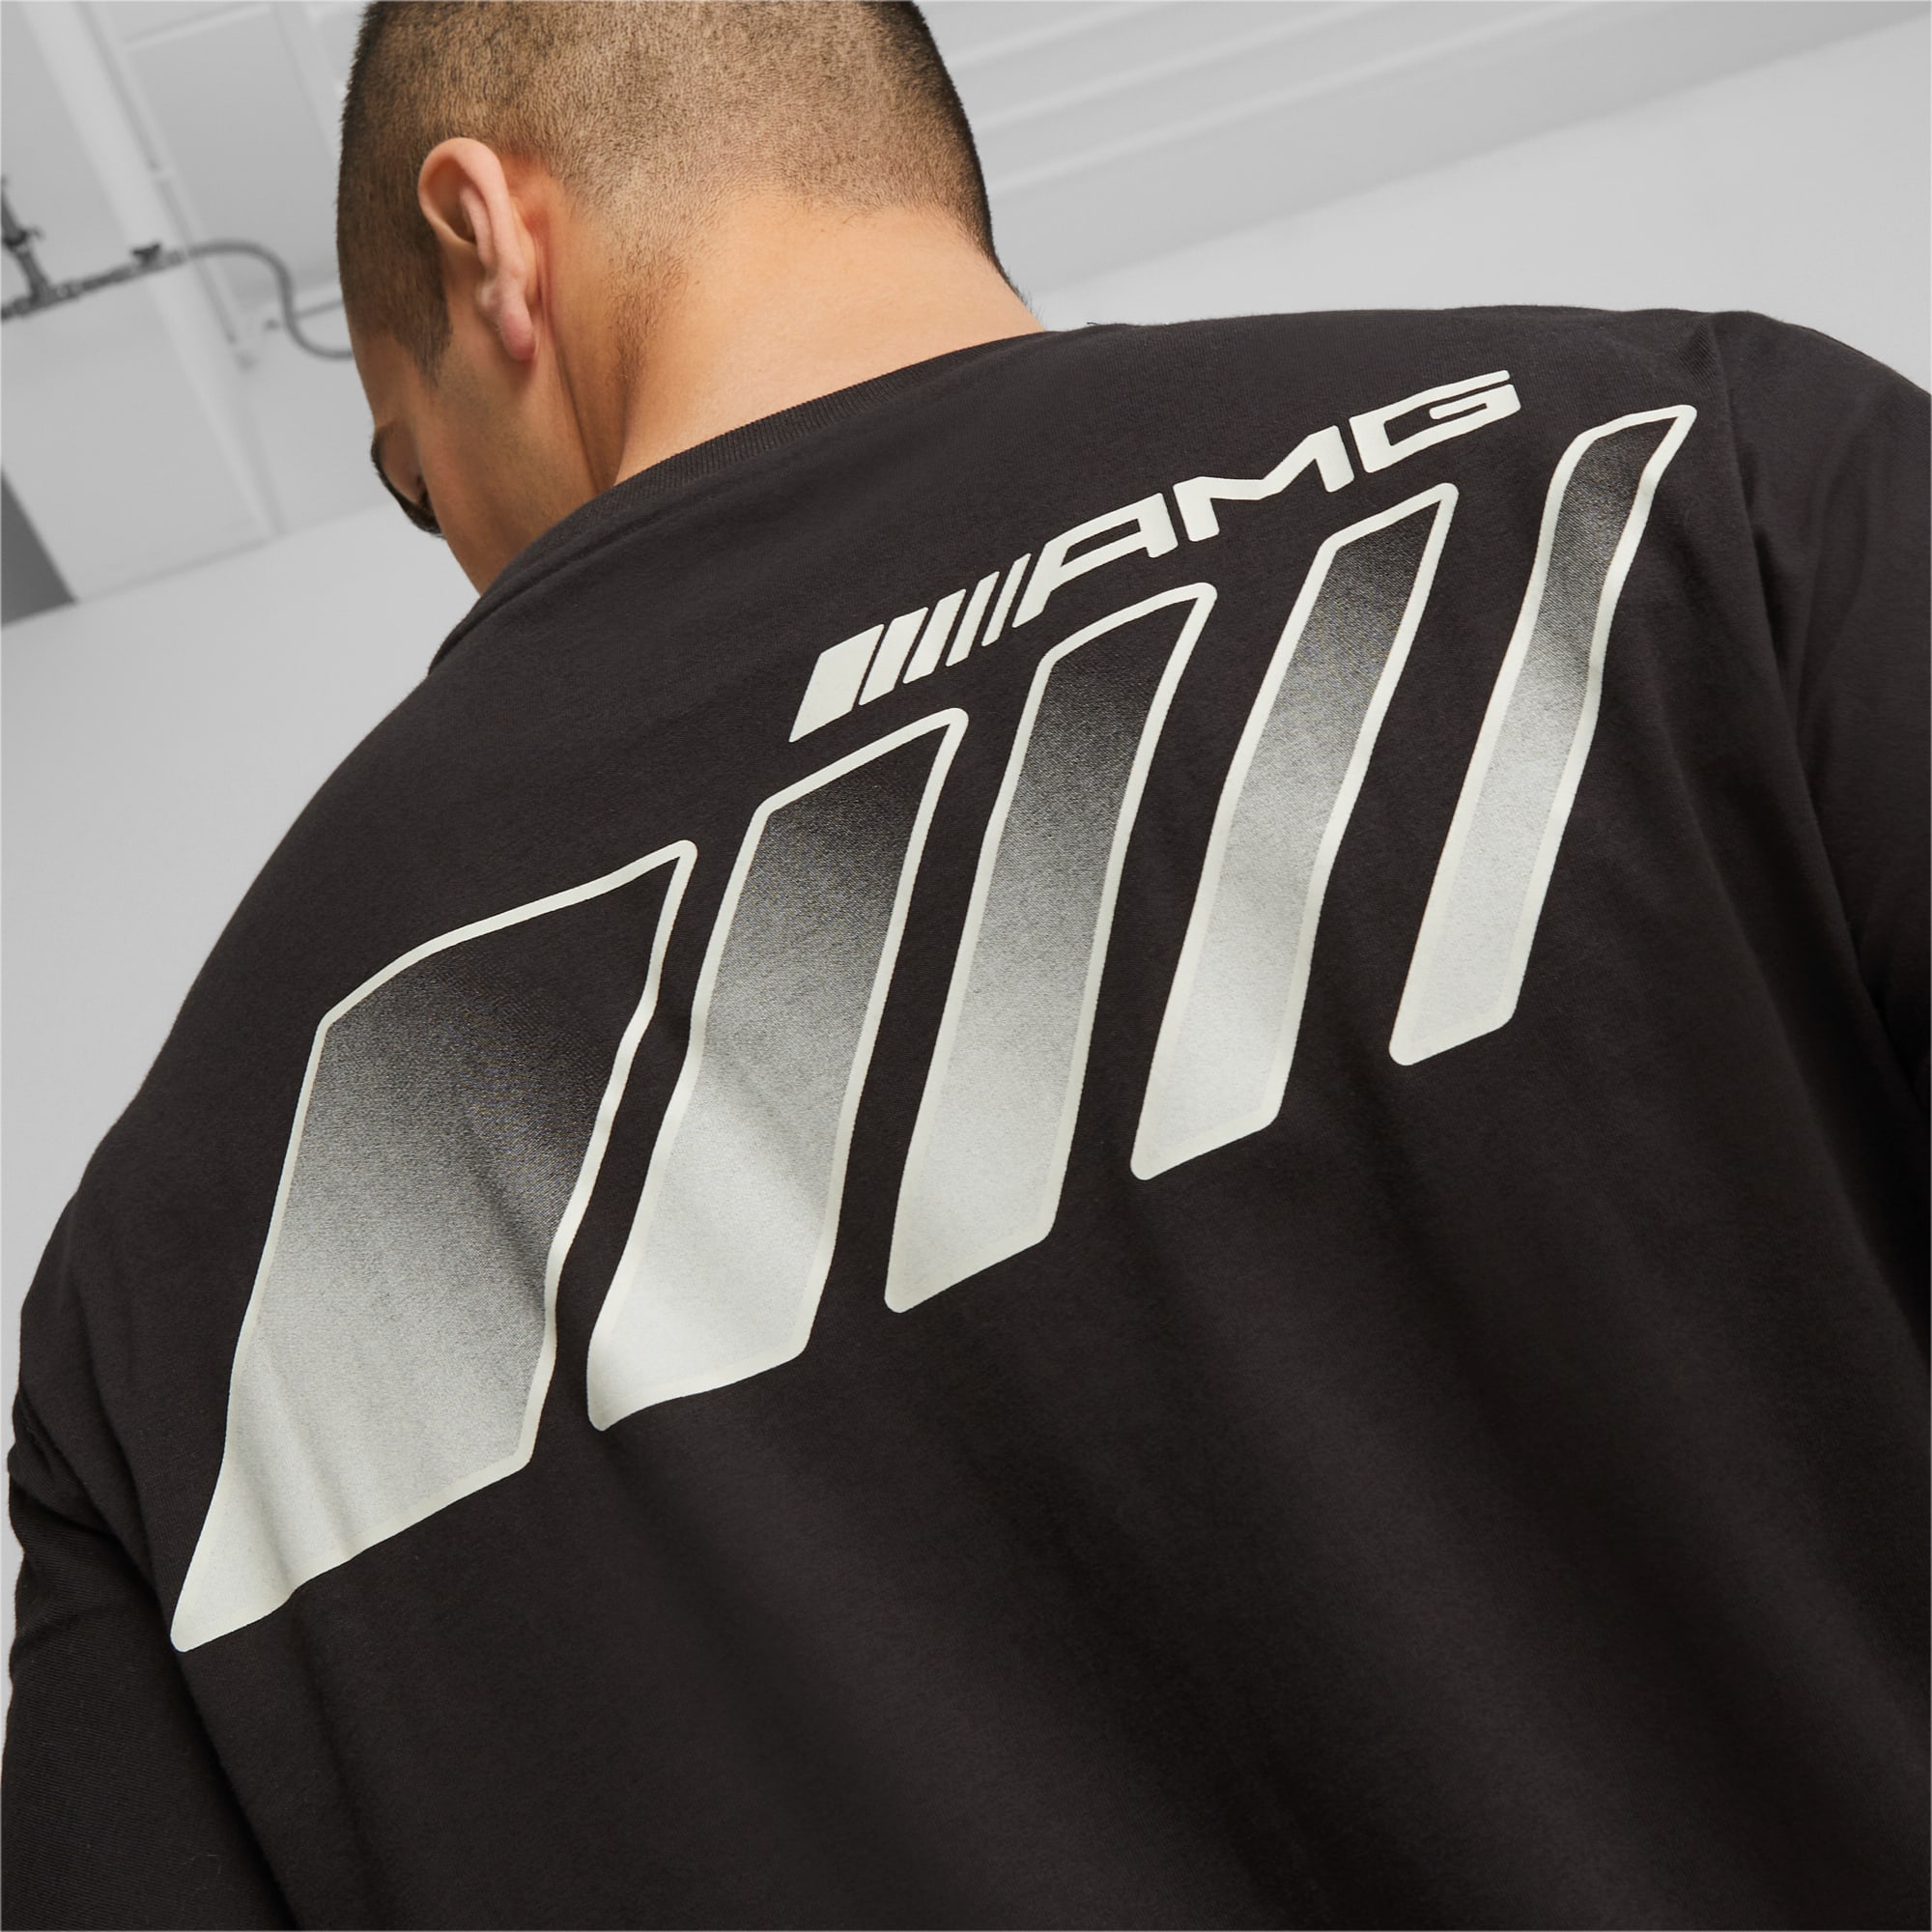 PUMA T-Shirt à Logo Mercedes-AMG Homme, Noir